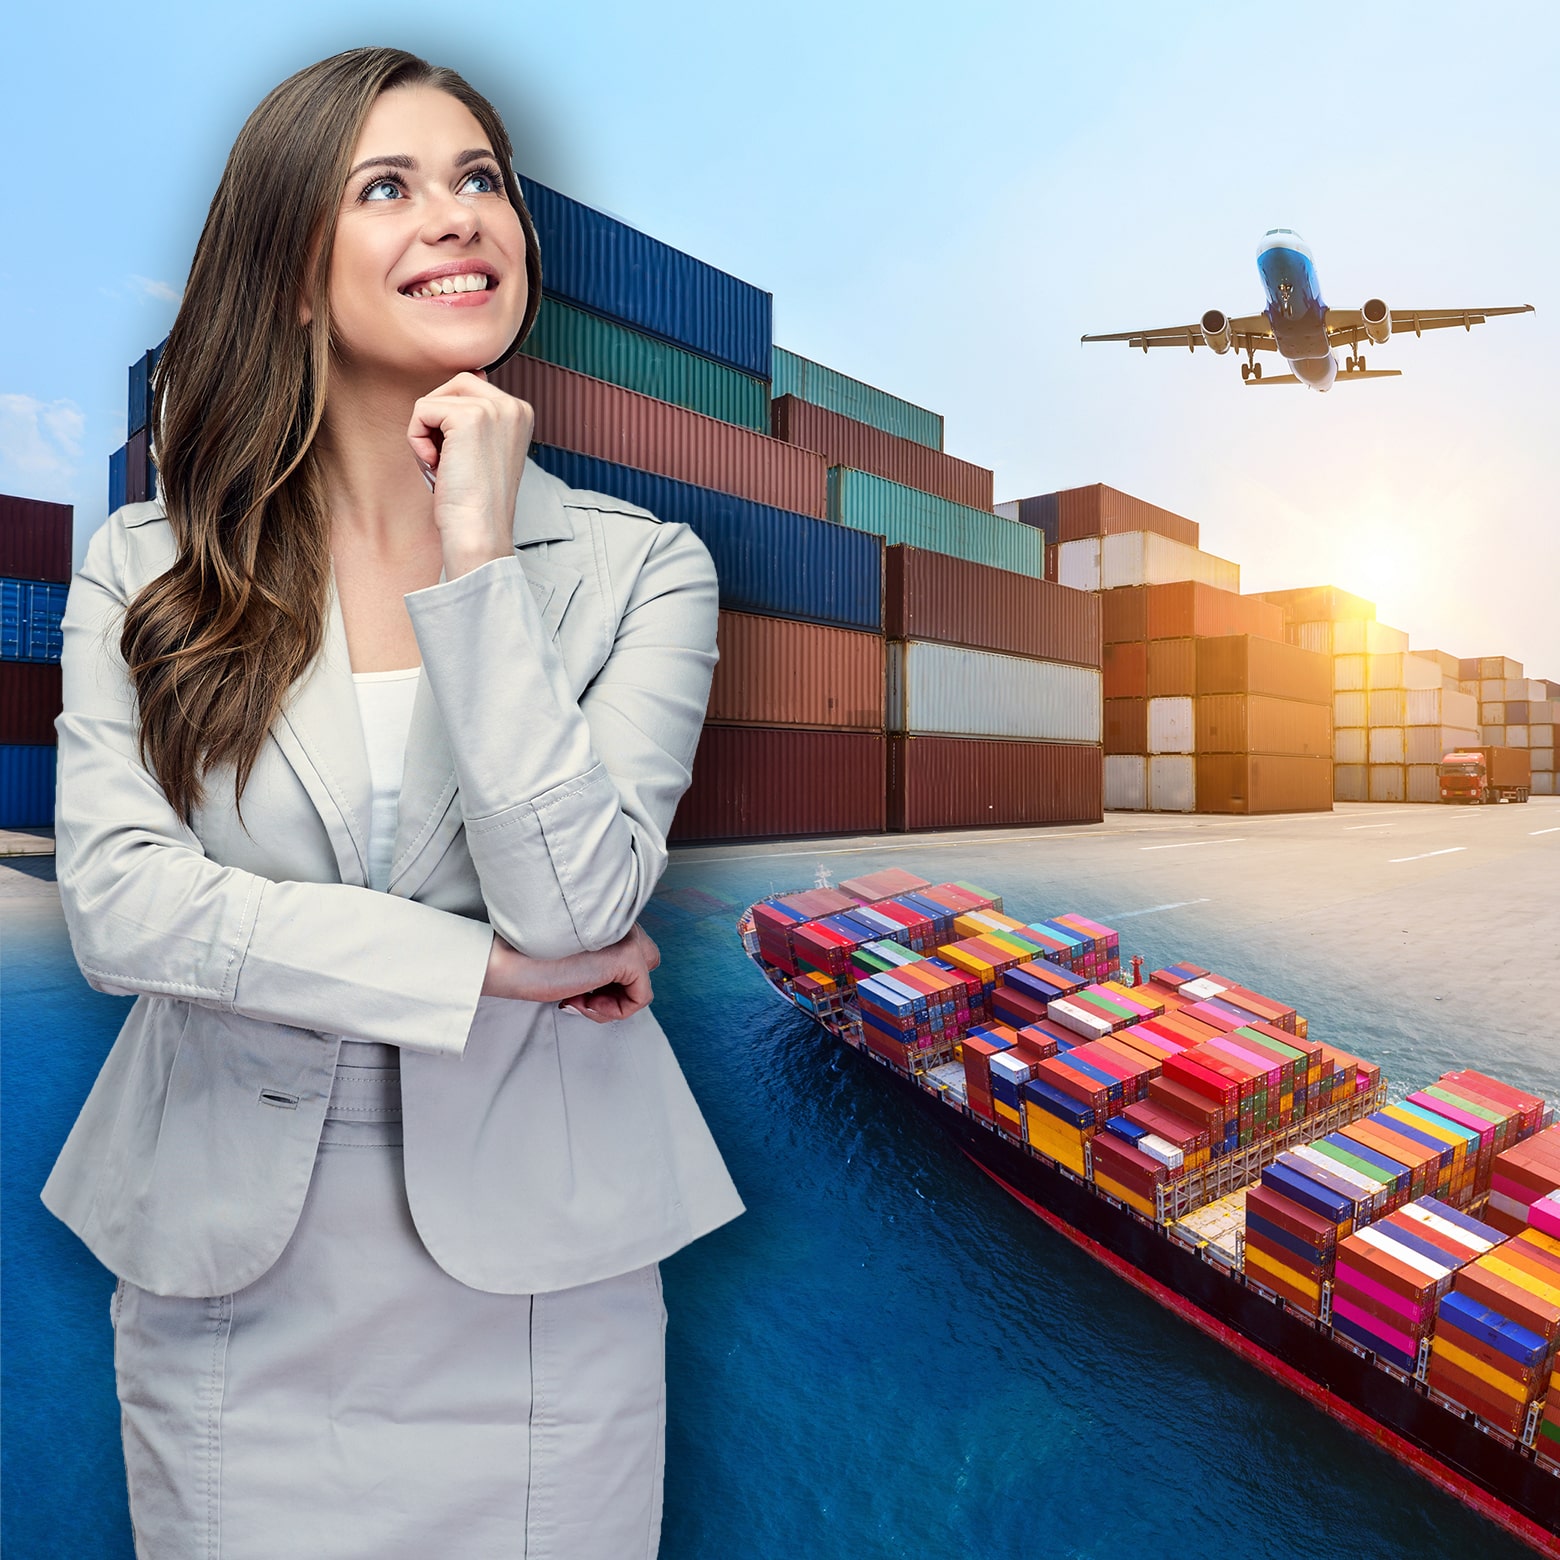 Certified International Freight Forwarding & Cargo Manager